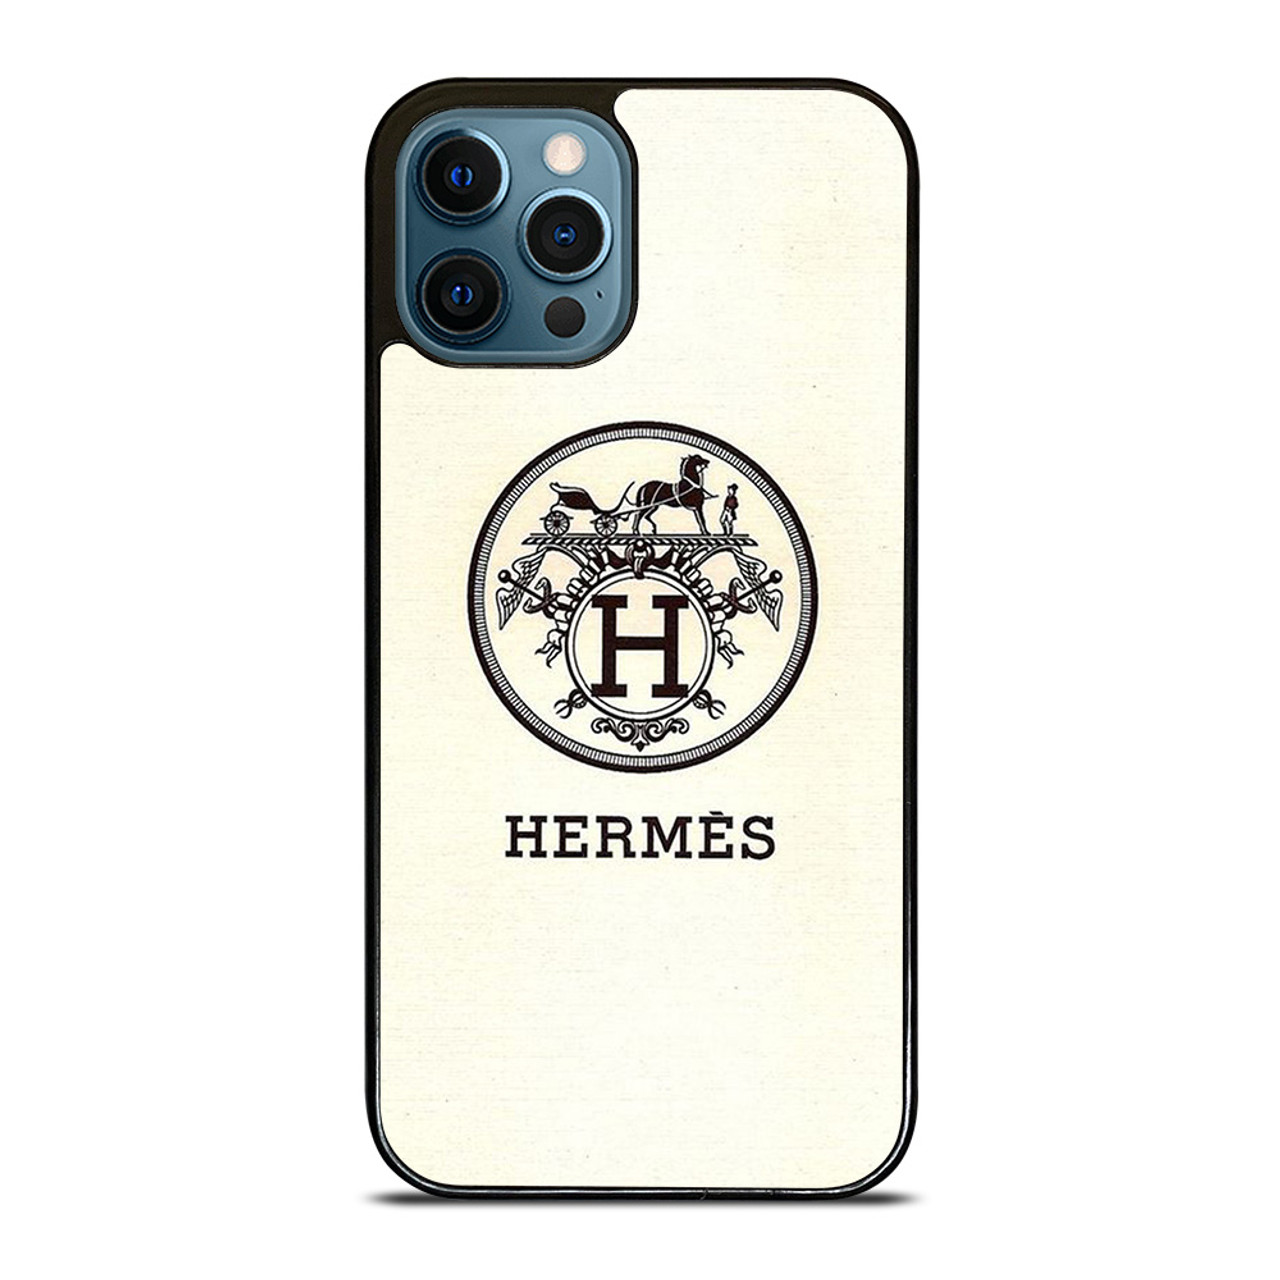 HERMES PARIS LOGO iPhone 12 Pro Max Case Cover